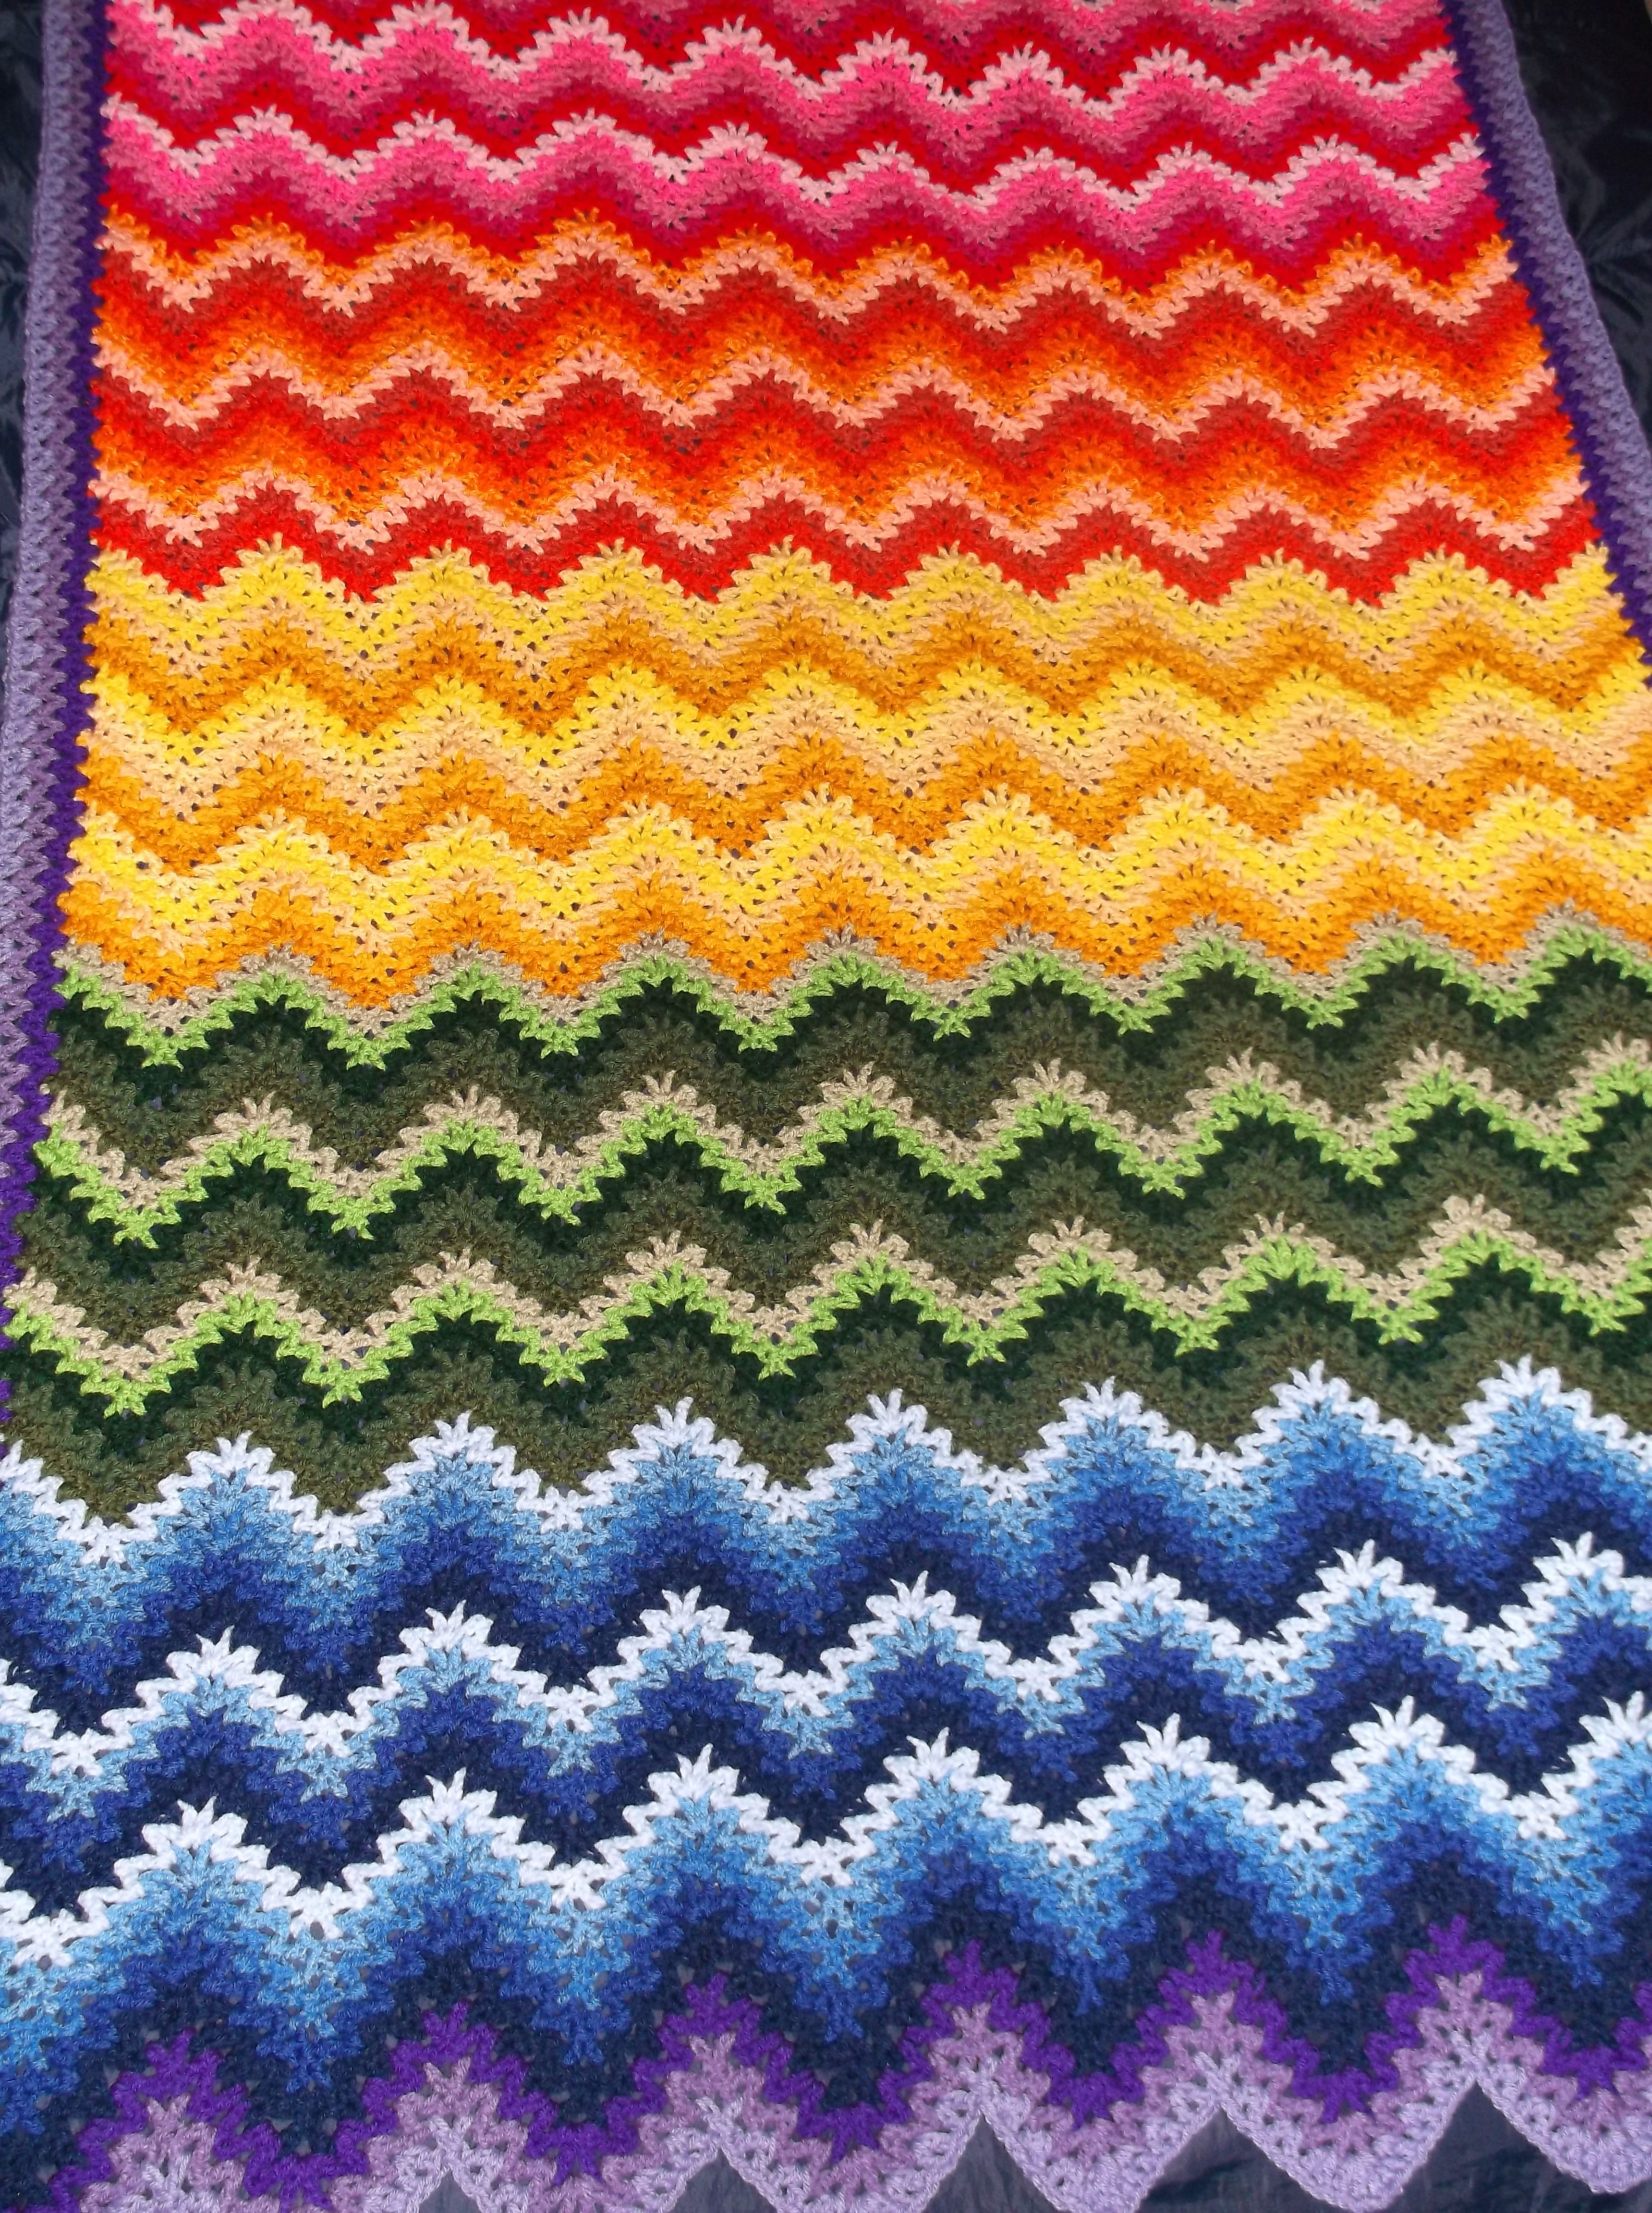 Crochet Ripple Afghan Patterns The Express V Stitch Ripple Pattern Knitting An Crochet Project